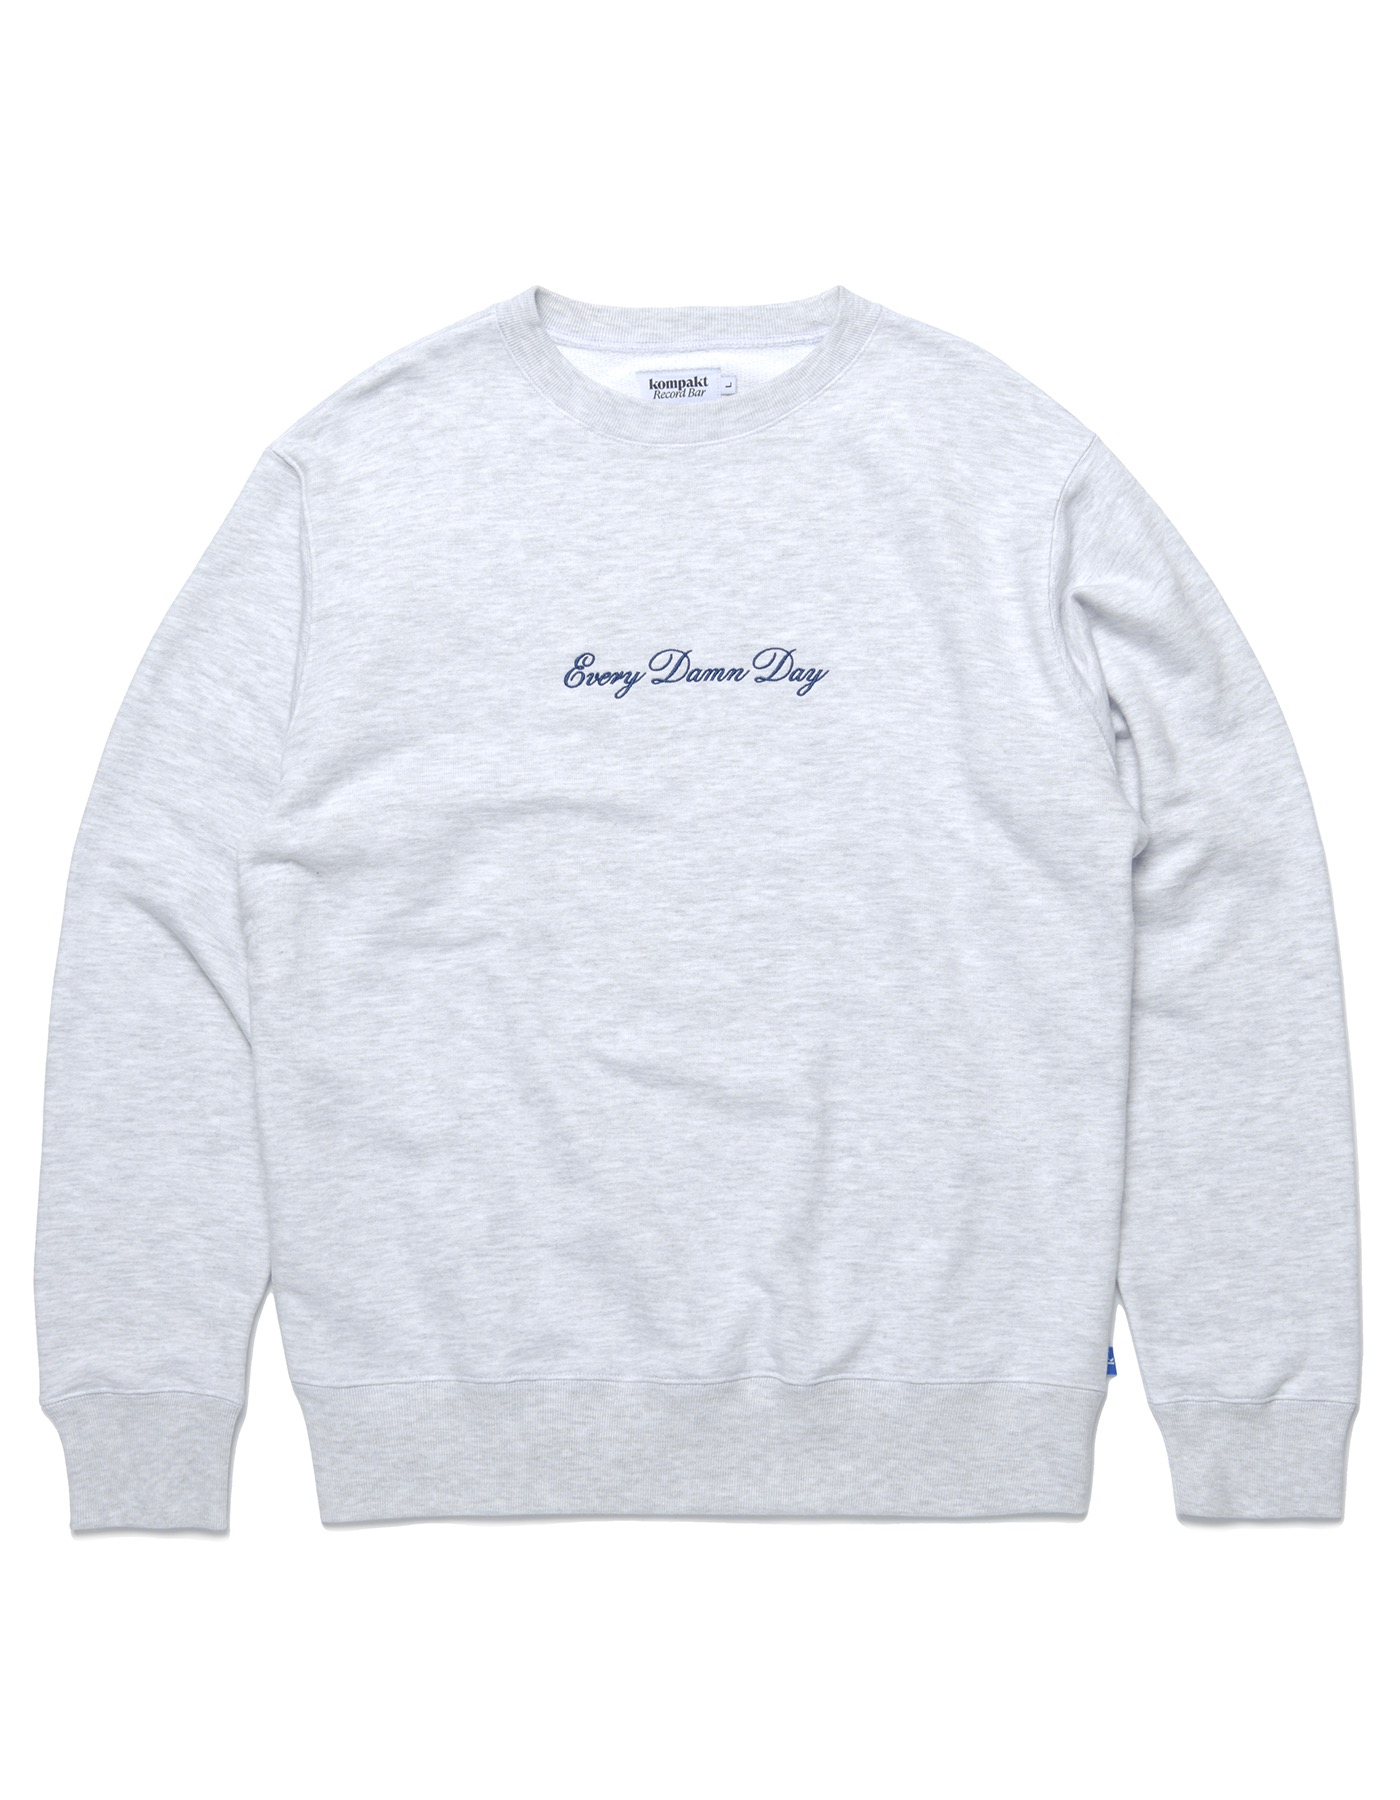 Every Damn Day Sweatshirts - White Melange